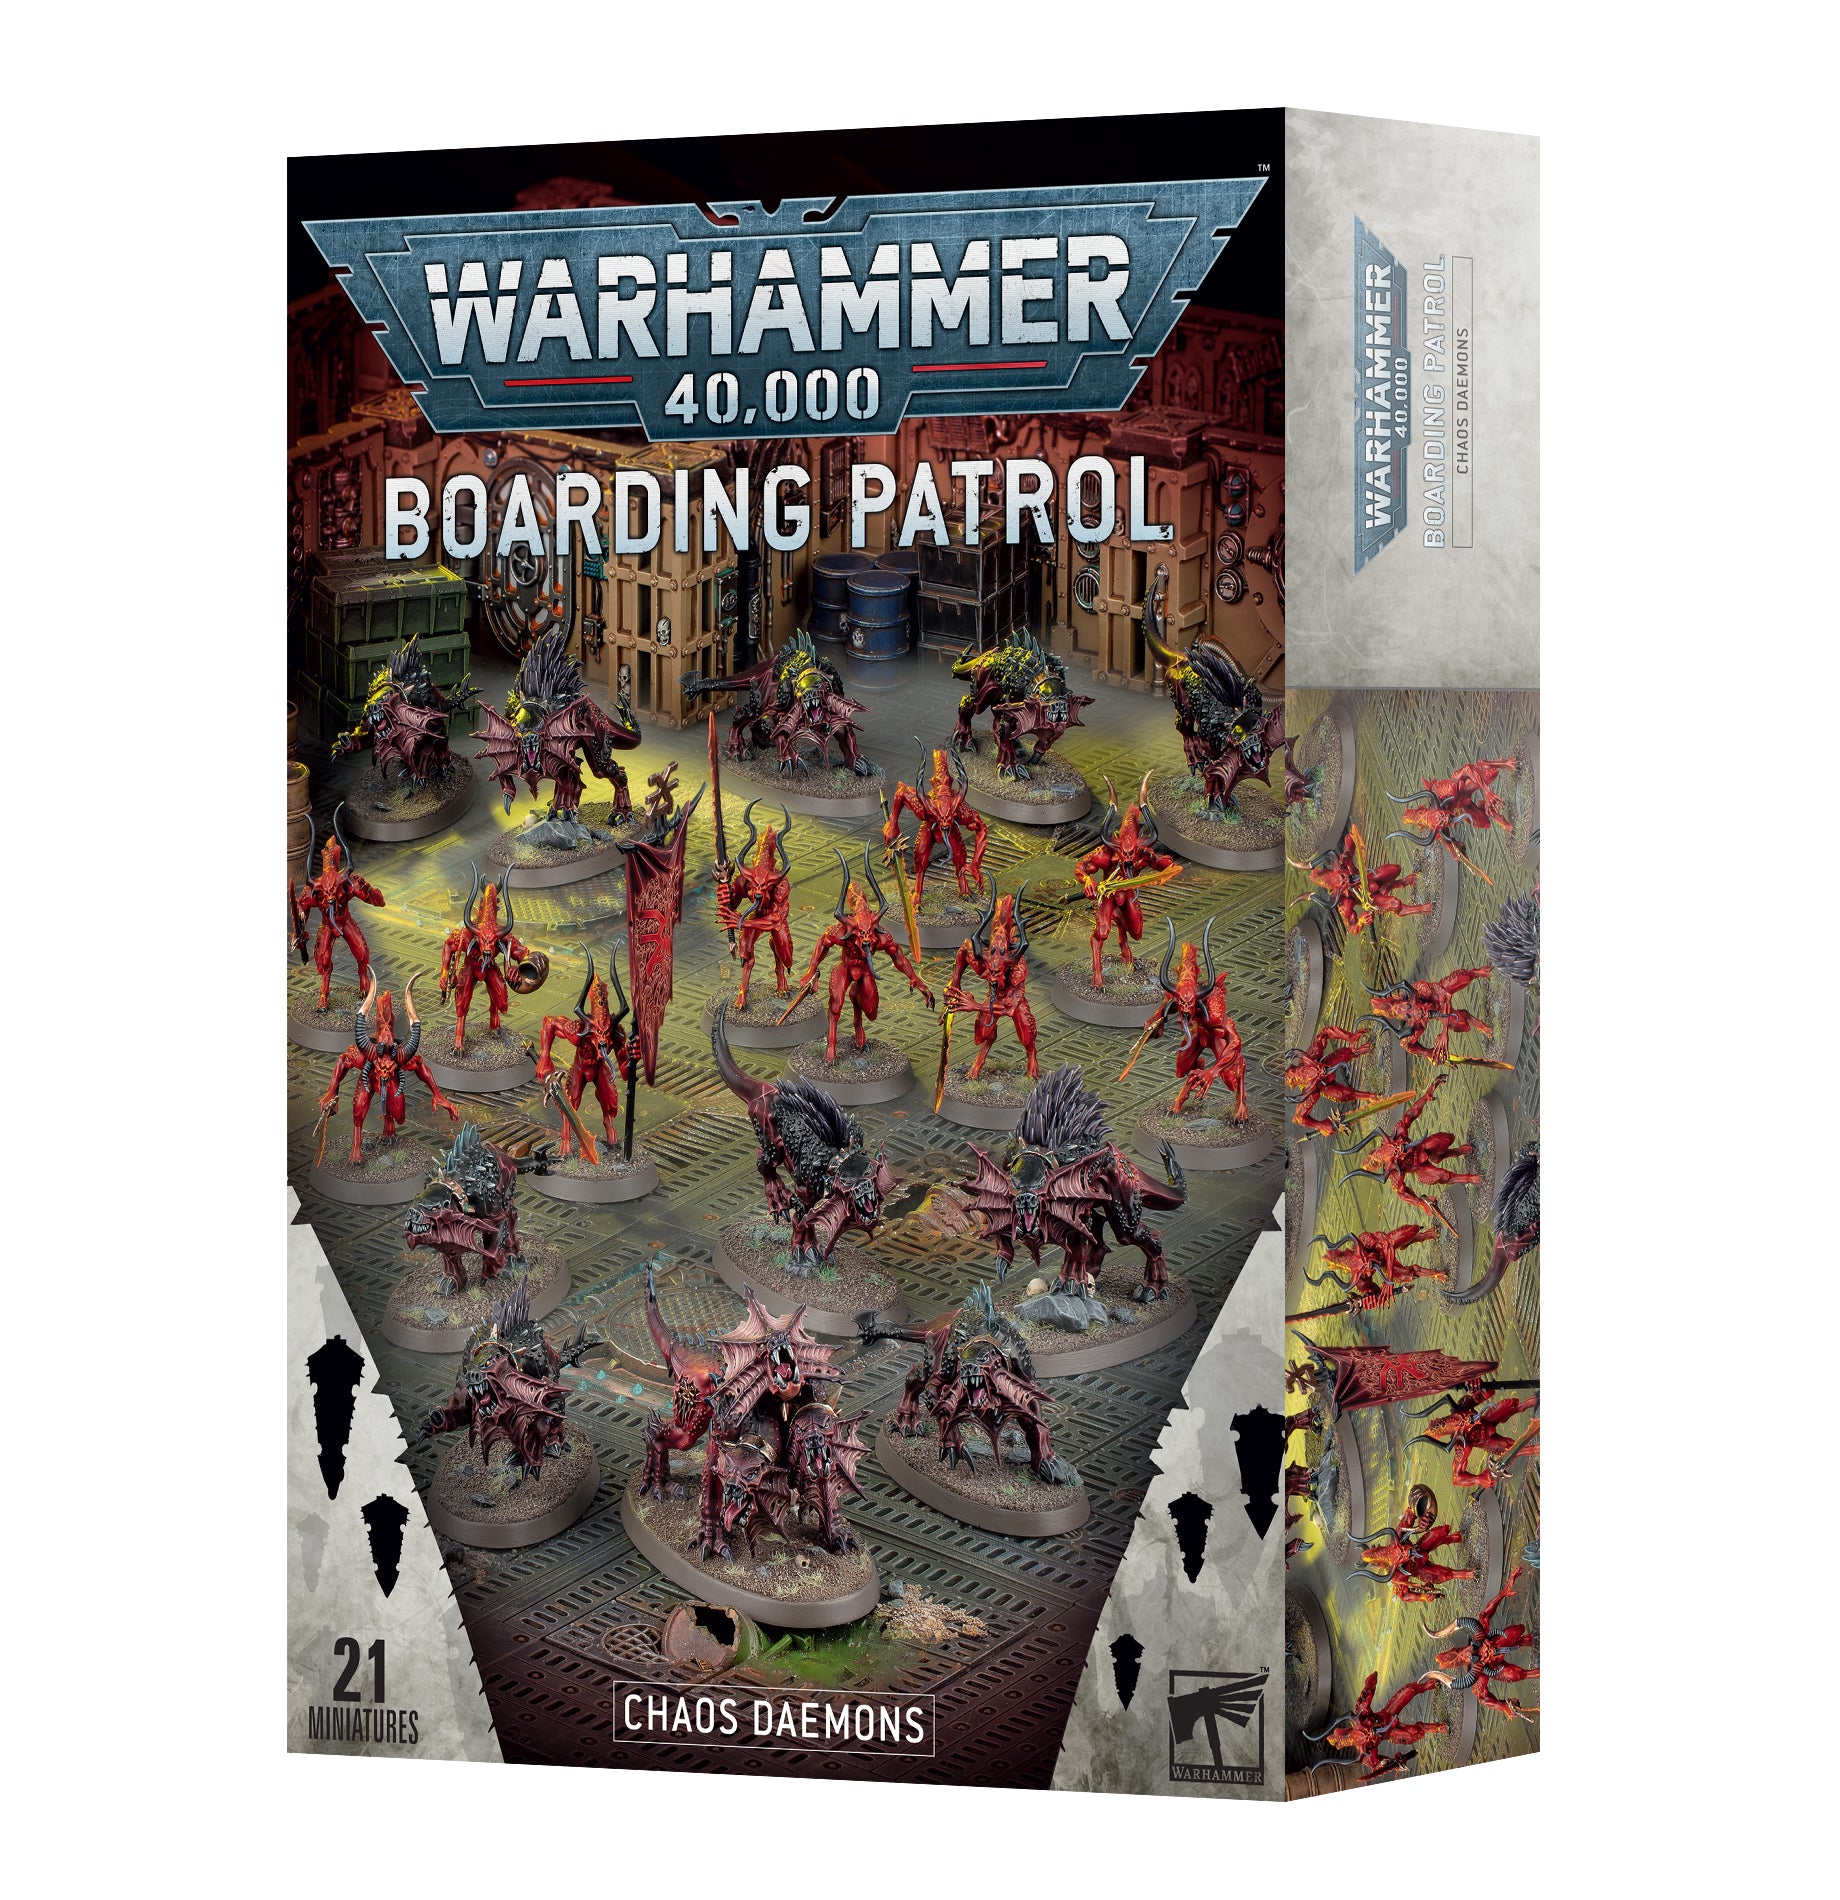 Warhammer 40k - Boarding Patrol: Chaos Daemons - Bards & Cards